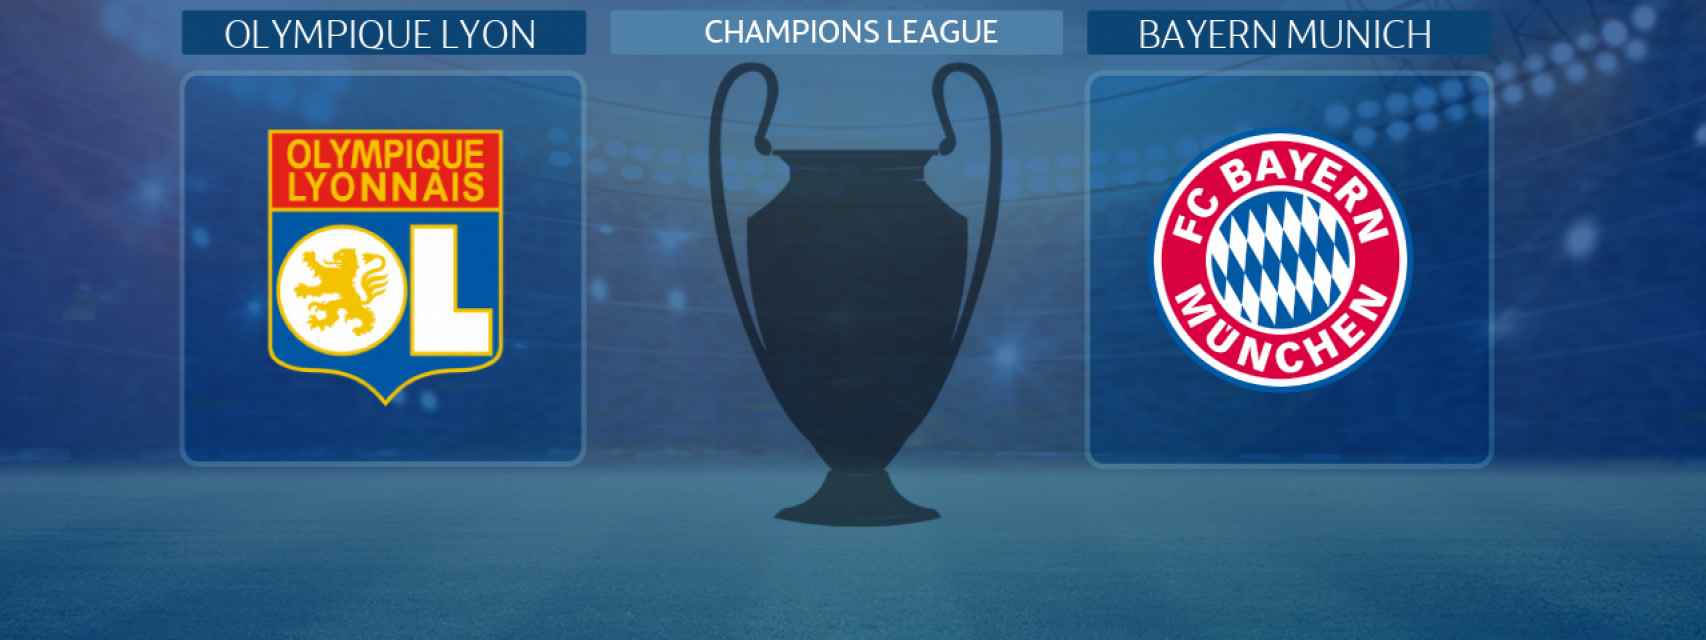 Olympique Lyon - Bayern Munic, semifinal de la Champions League